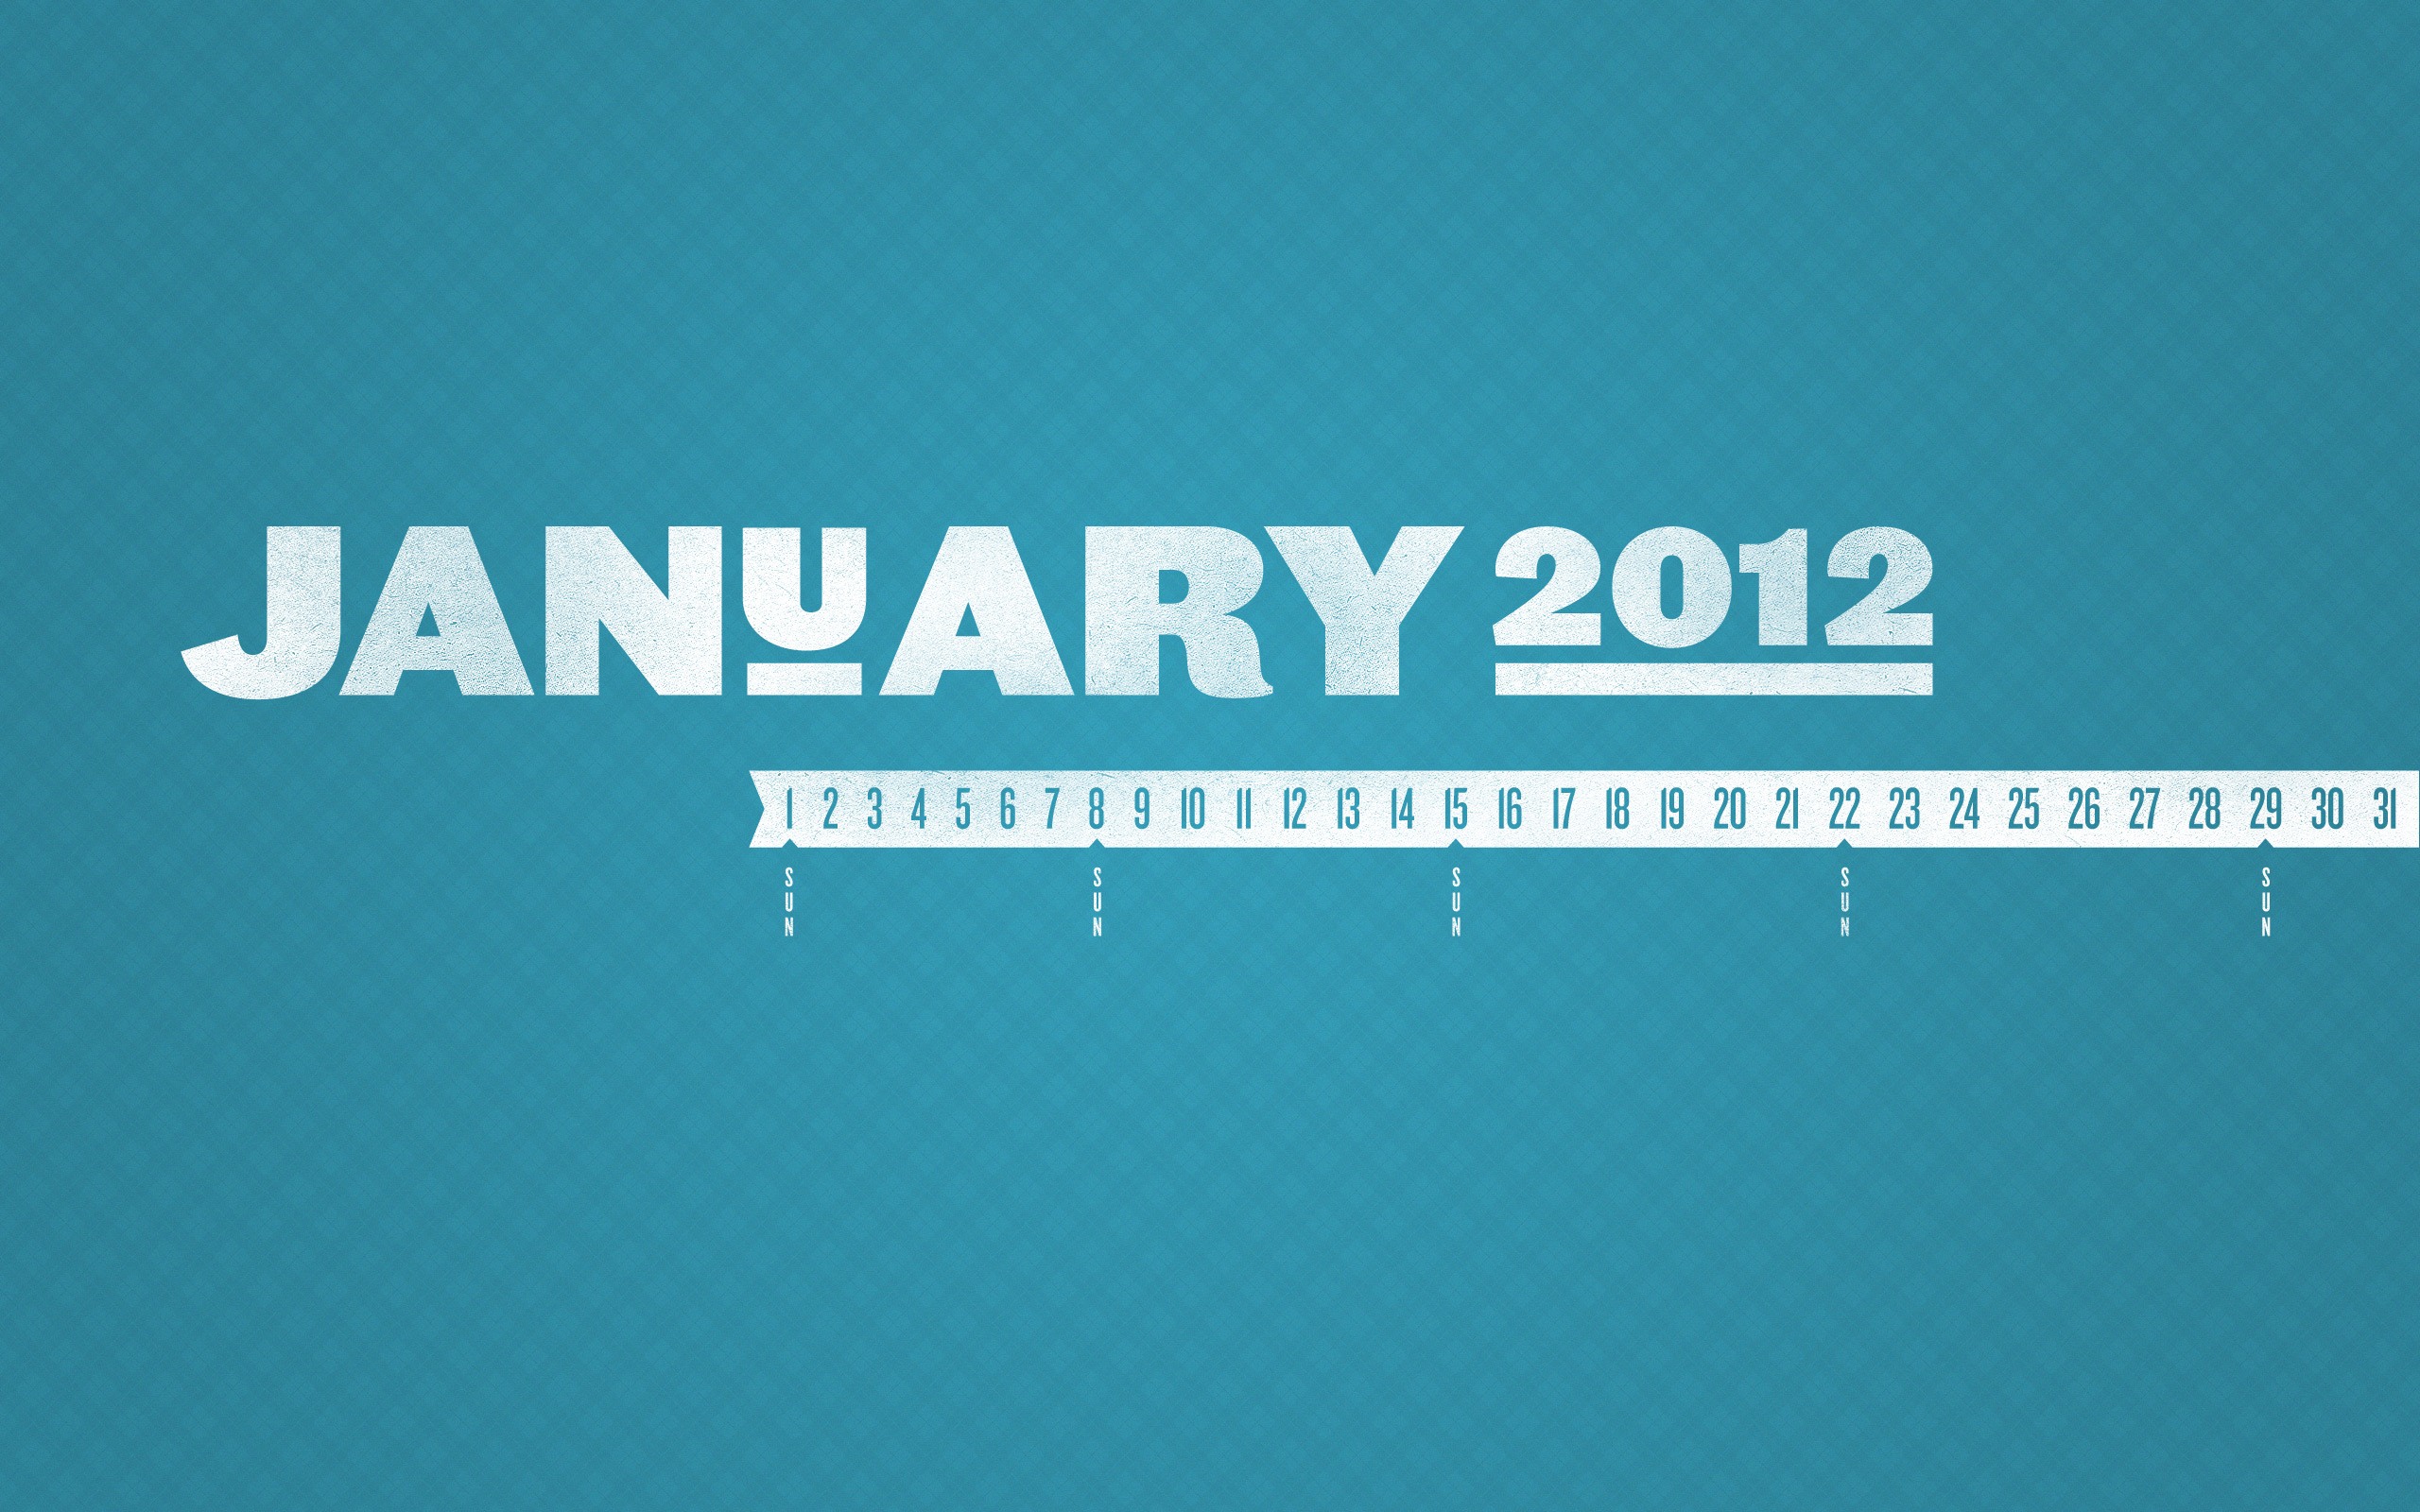 January 2012 Calendar Wallpapers #19 - 2560x1600